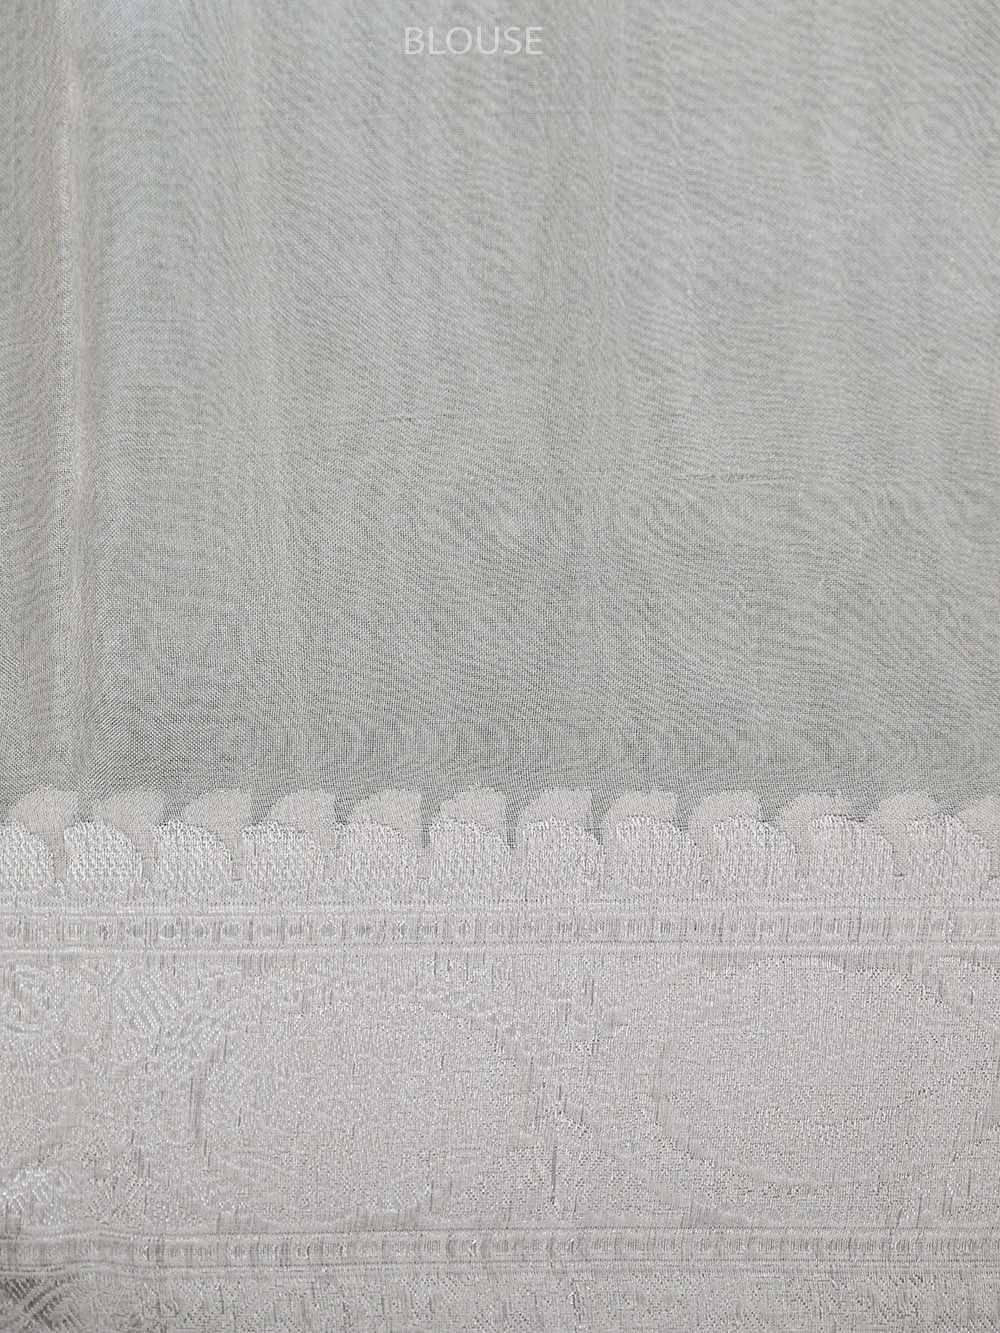 Off White Booti Tissue Handloom Banarasi Saree - Sacred Weaves